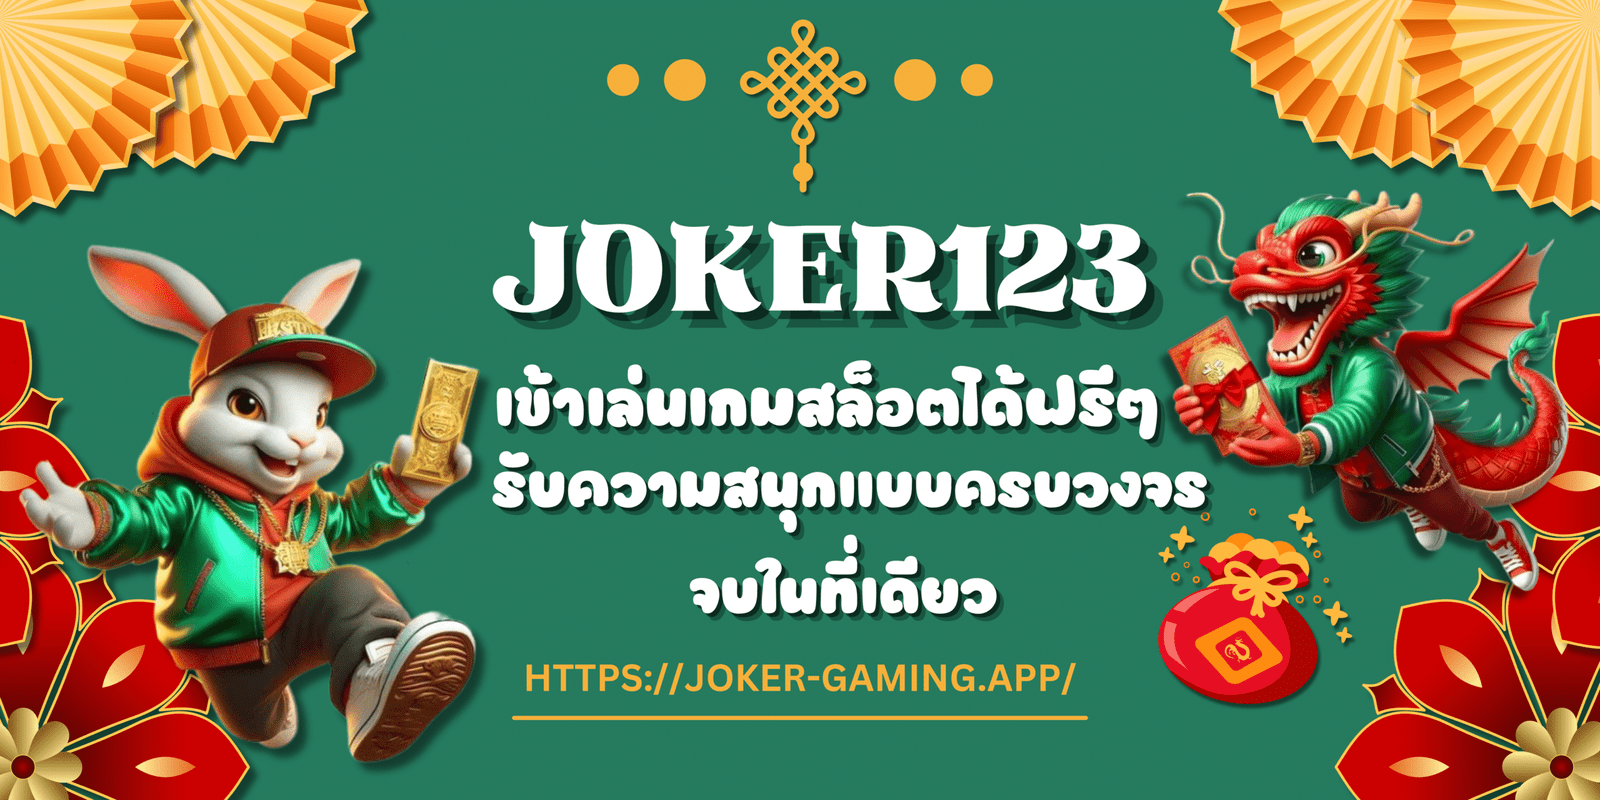 joker123-สมัครสมาชิก